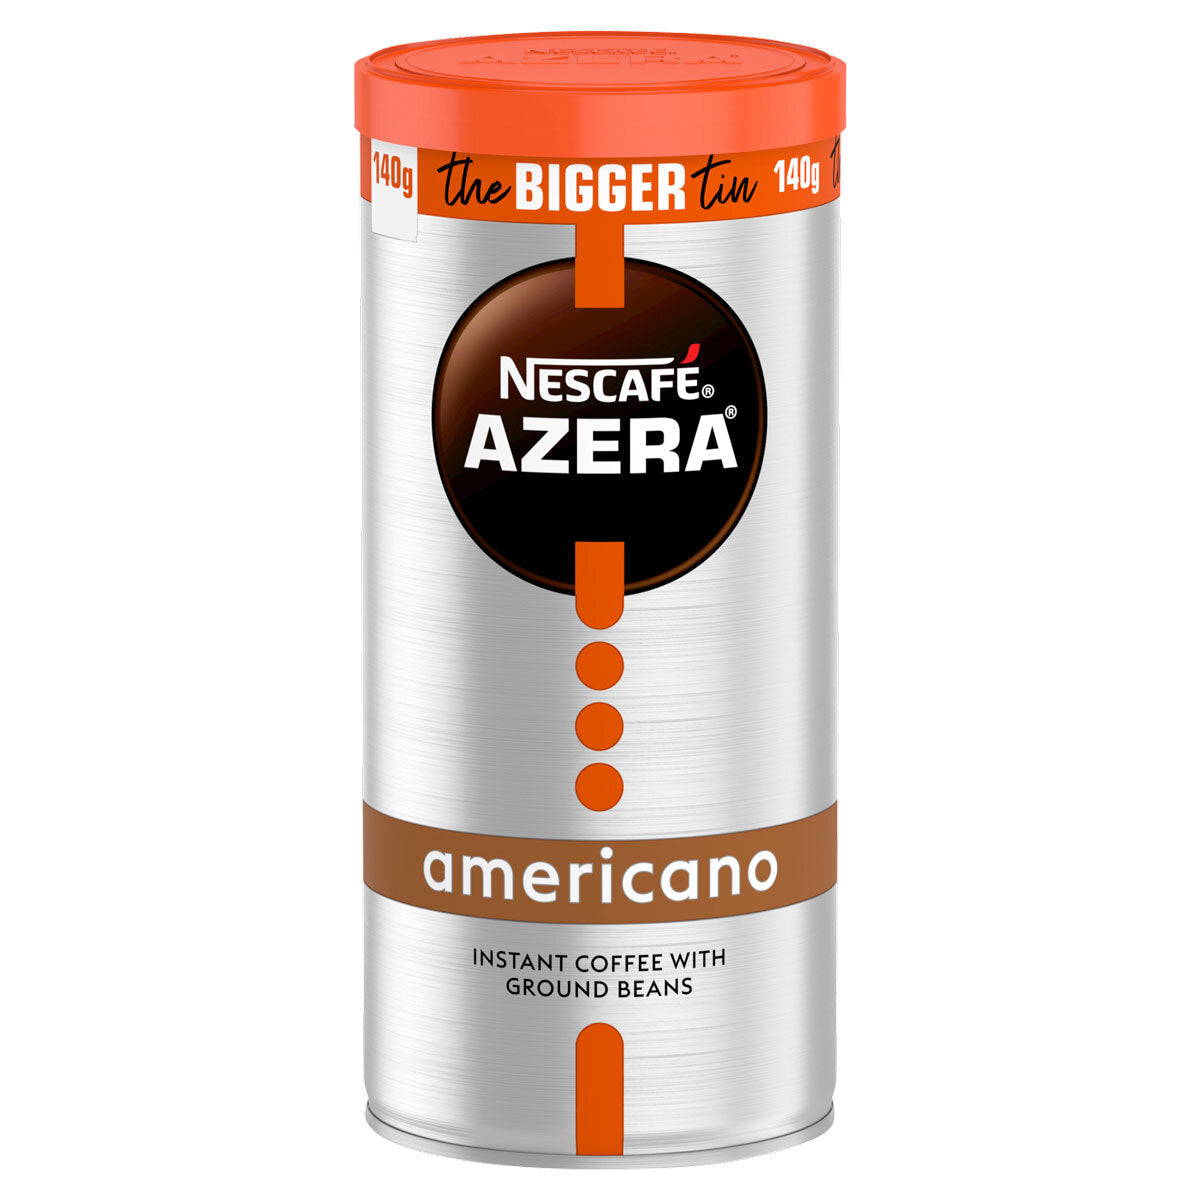 Nescafé Azera Americano Coffee with Ground Beans - 140g